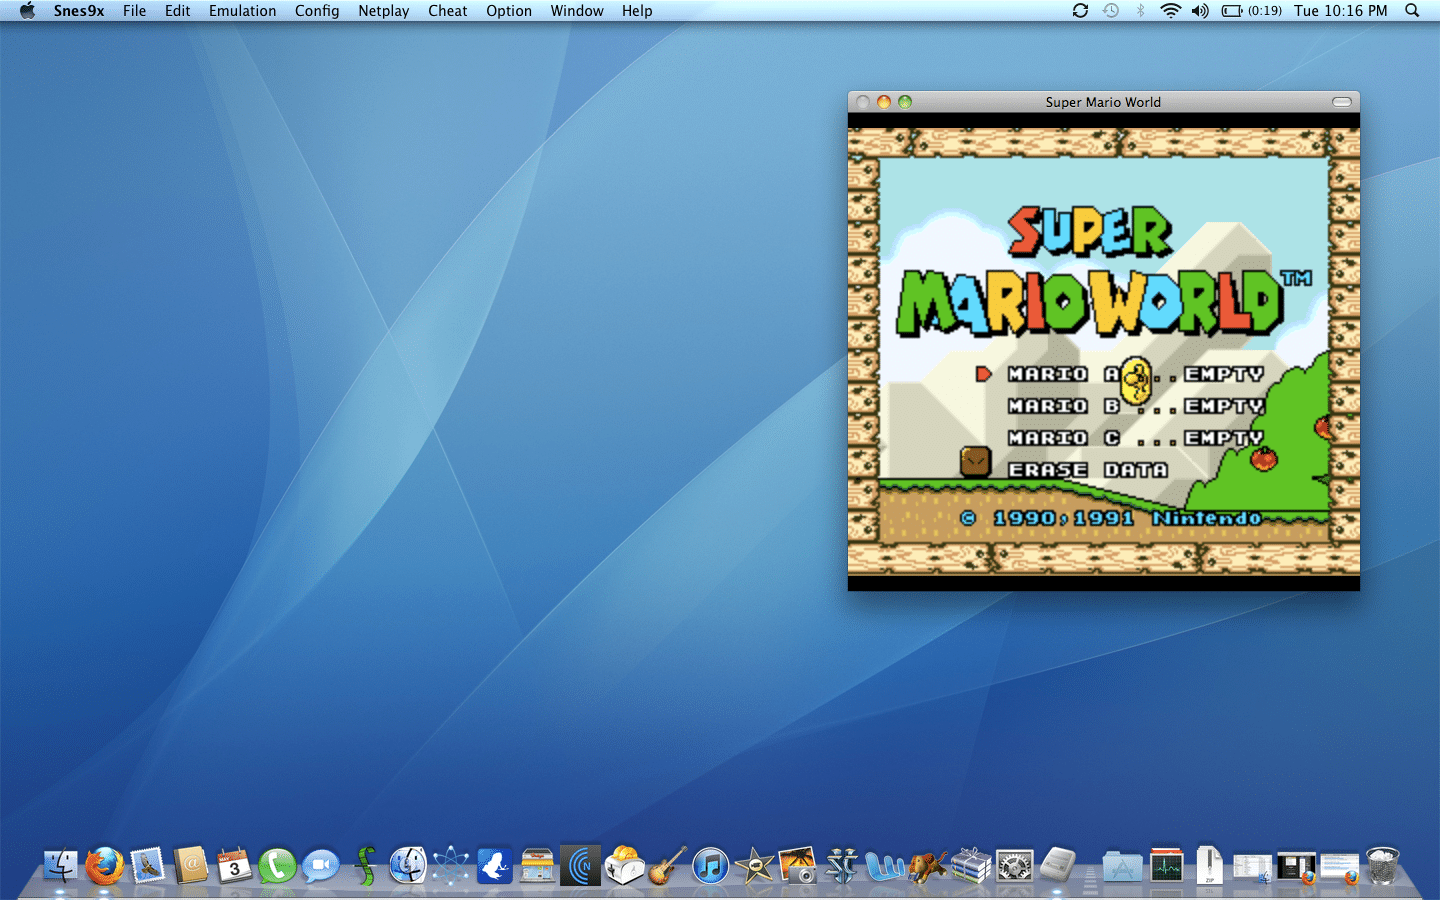 best xbox 360 emulator for mac